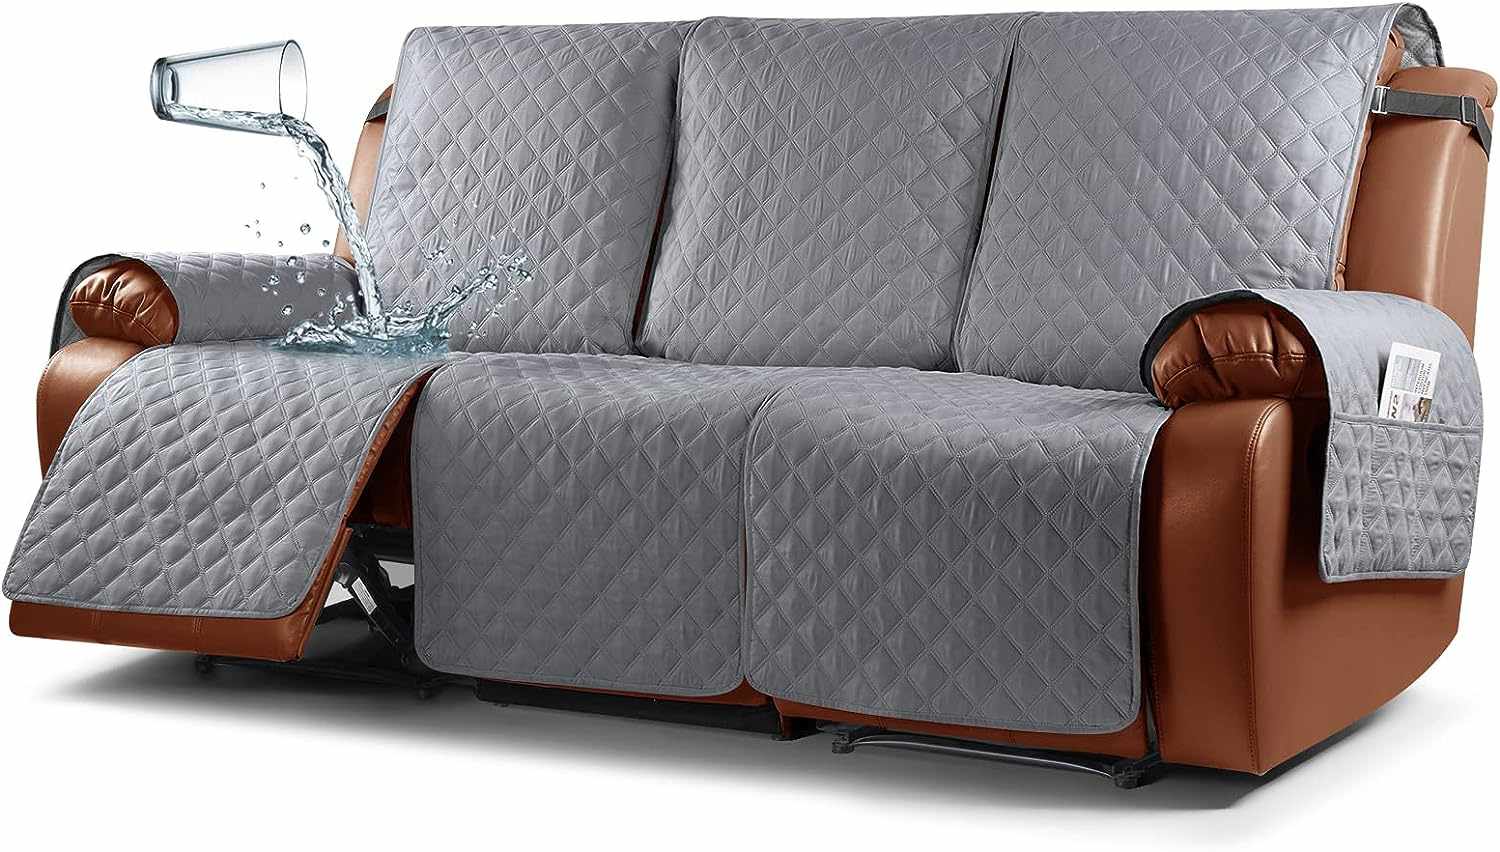 Ruaozz Waterproof Recliner Sofa Cover